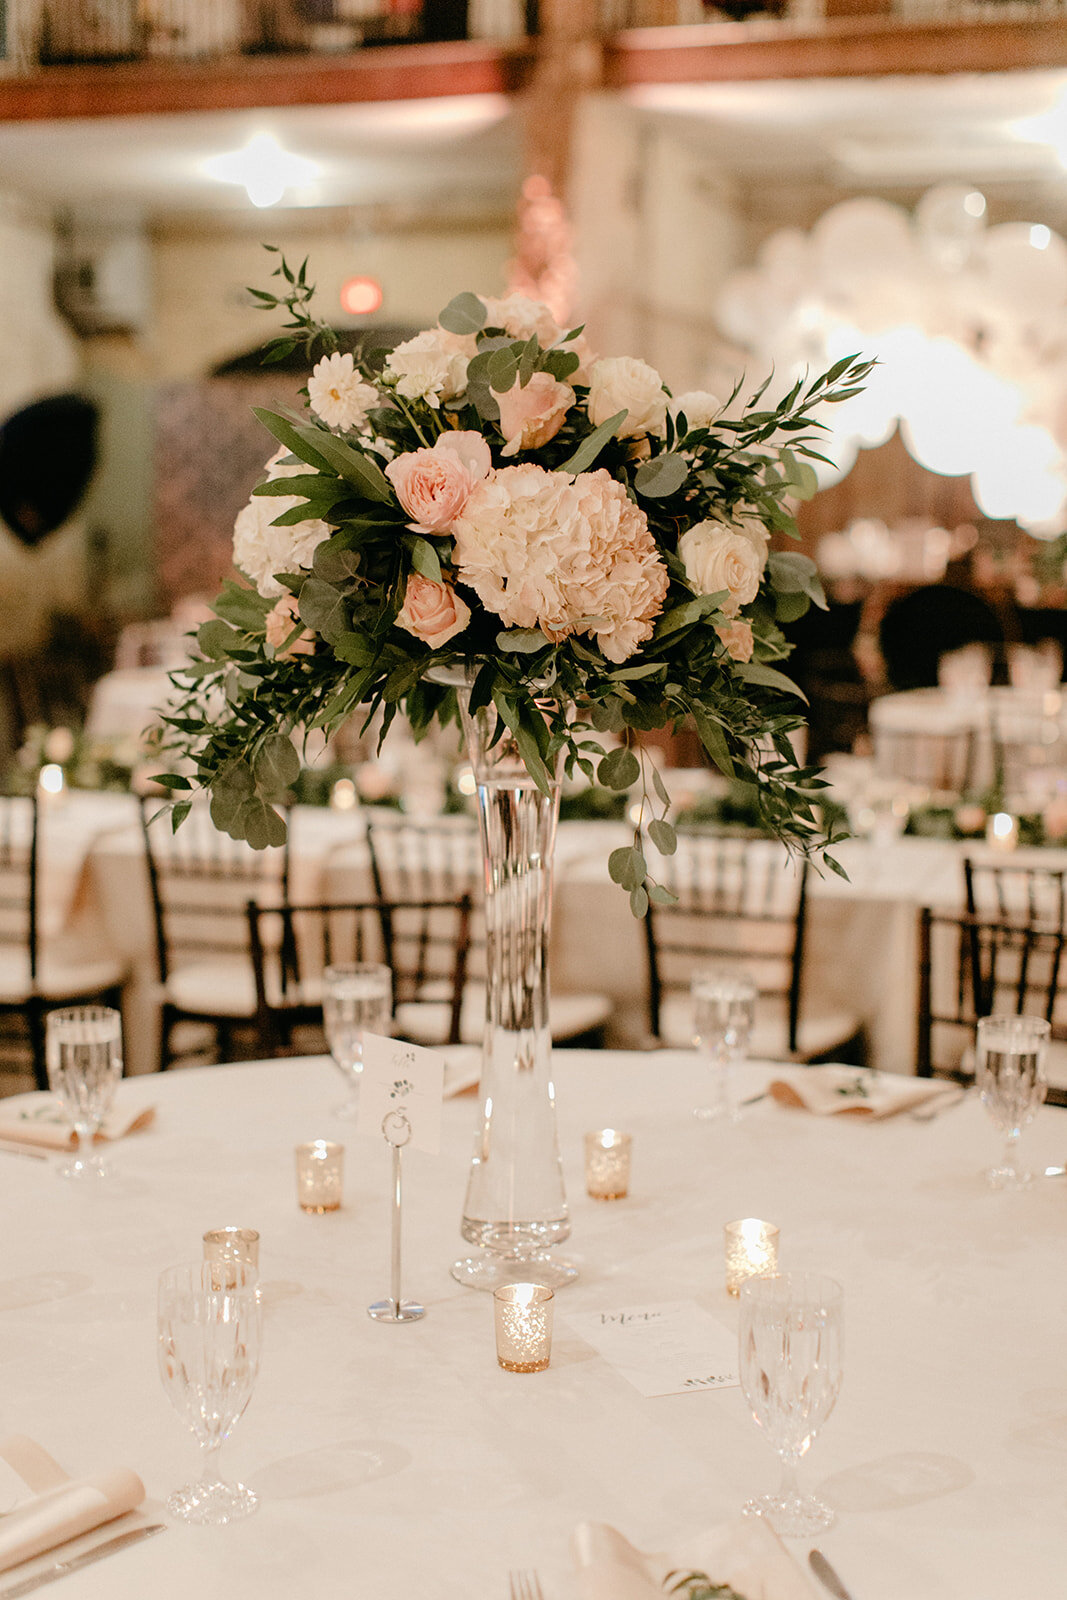 30 Wedding Centerpiece Tall Pink White Flowers Greenery.jpg